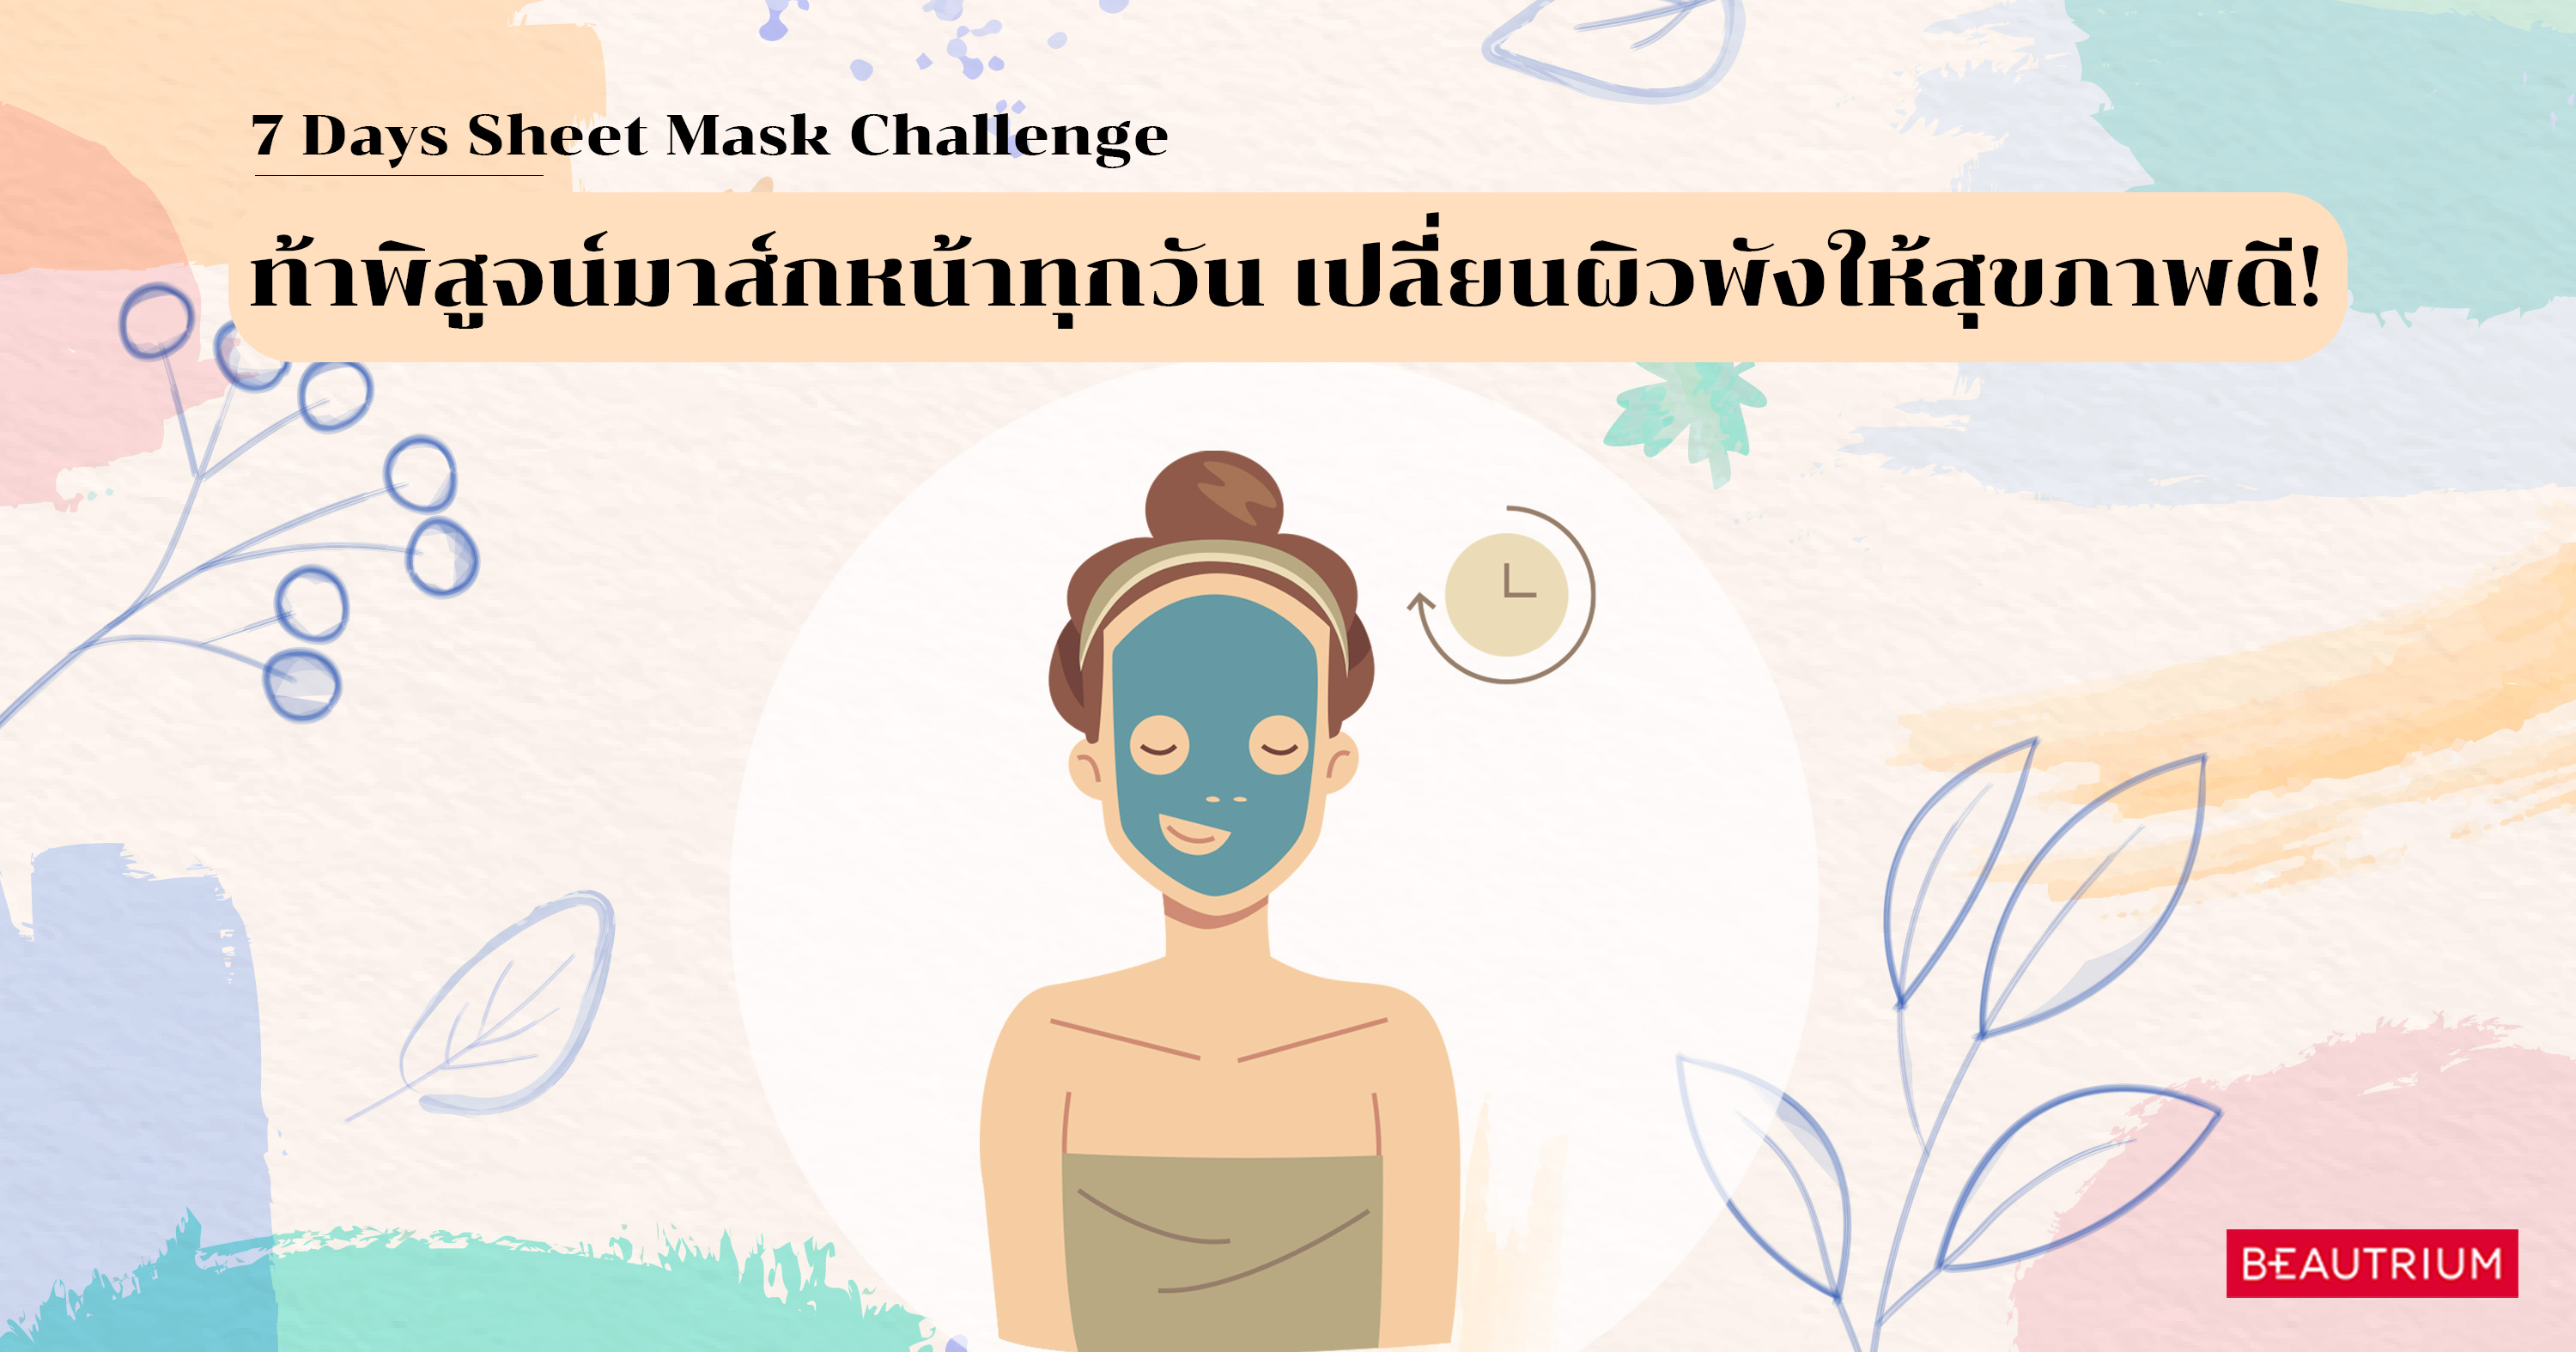 7 Days Sheet Mask Challenge ท้าพิสูจน์มาส์กหน้าทุกวัน เปลี่ยนผิวพังให้สุขภาพดี!